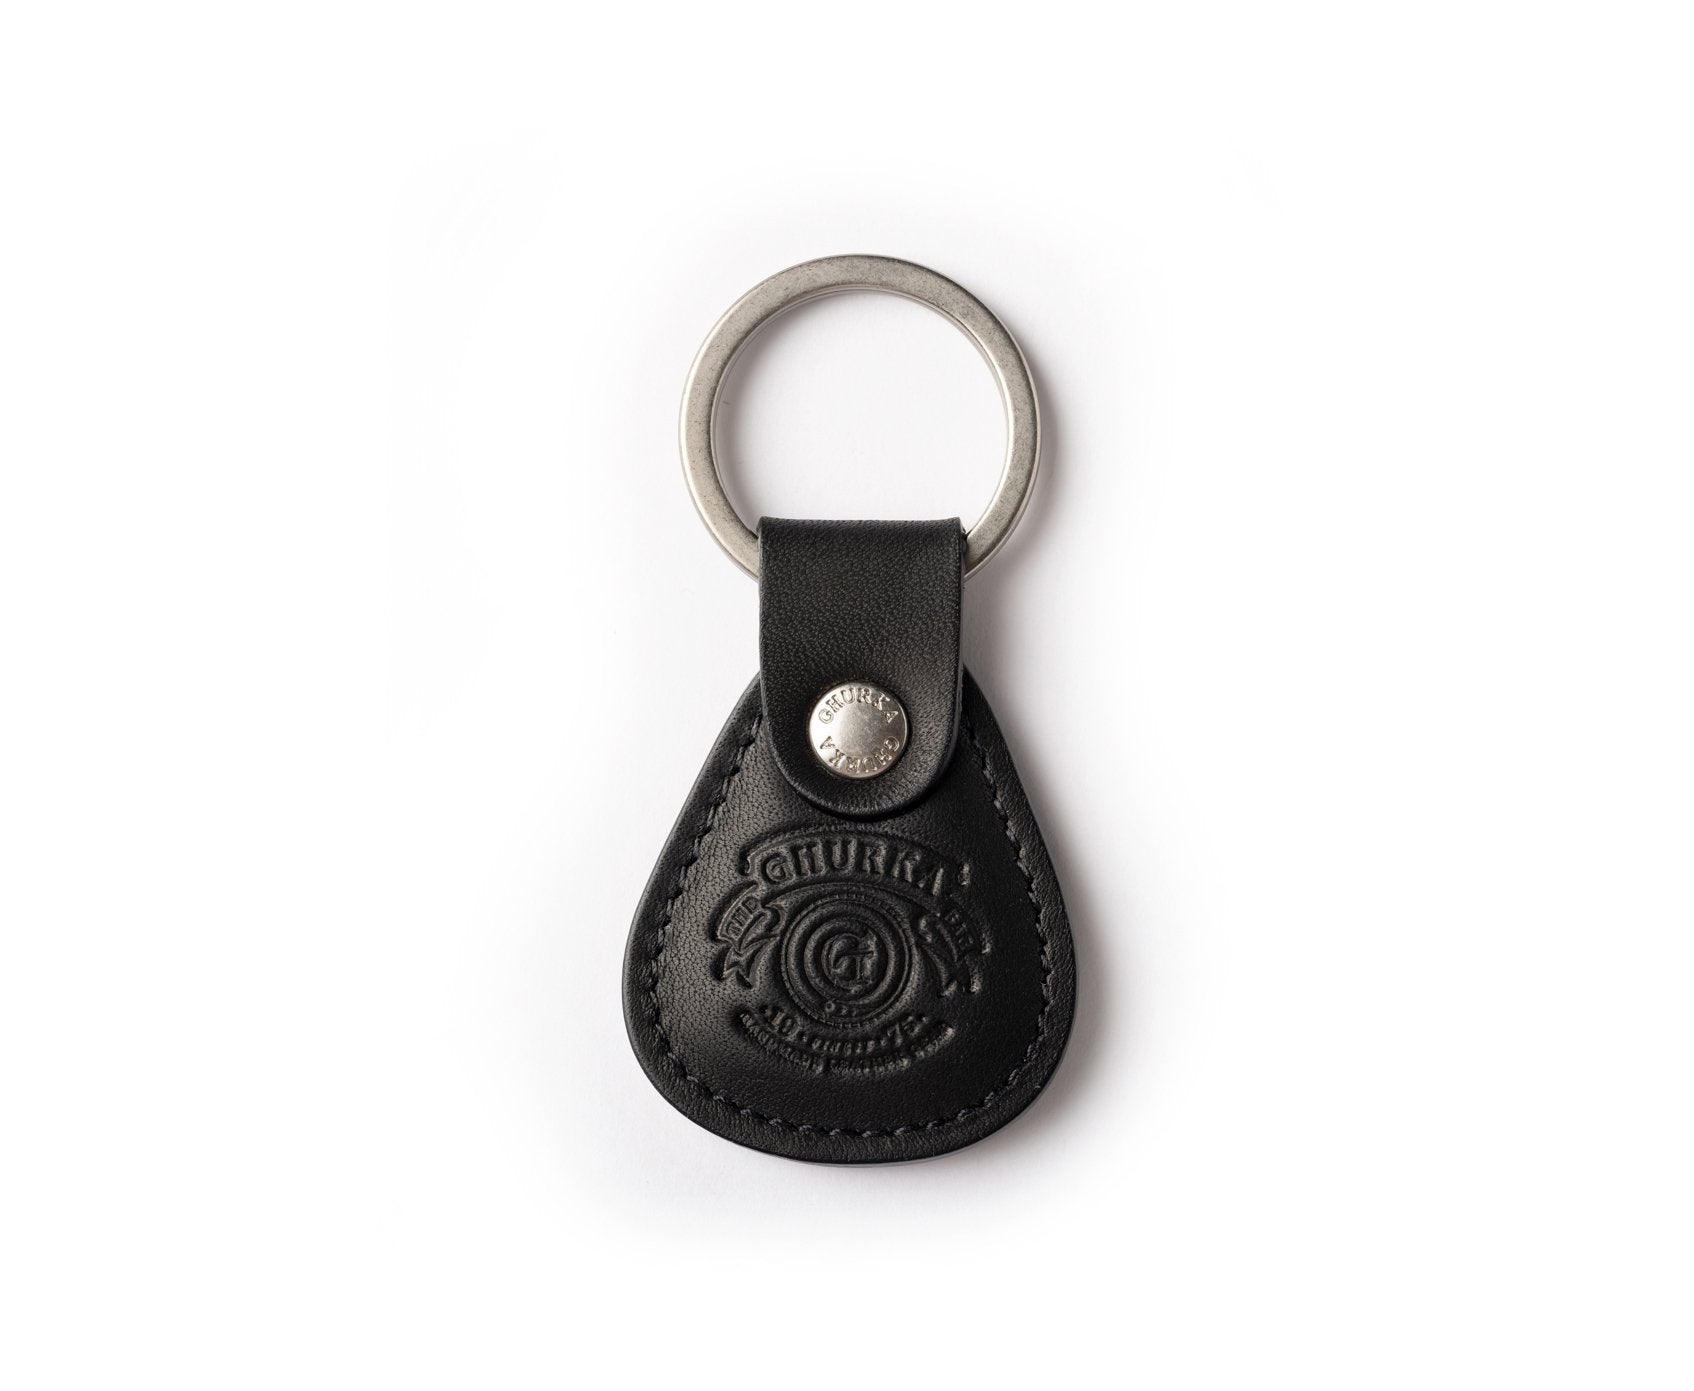 Ghurka Brass Key Ring, Black Leather Key Ring